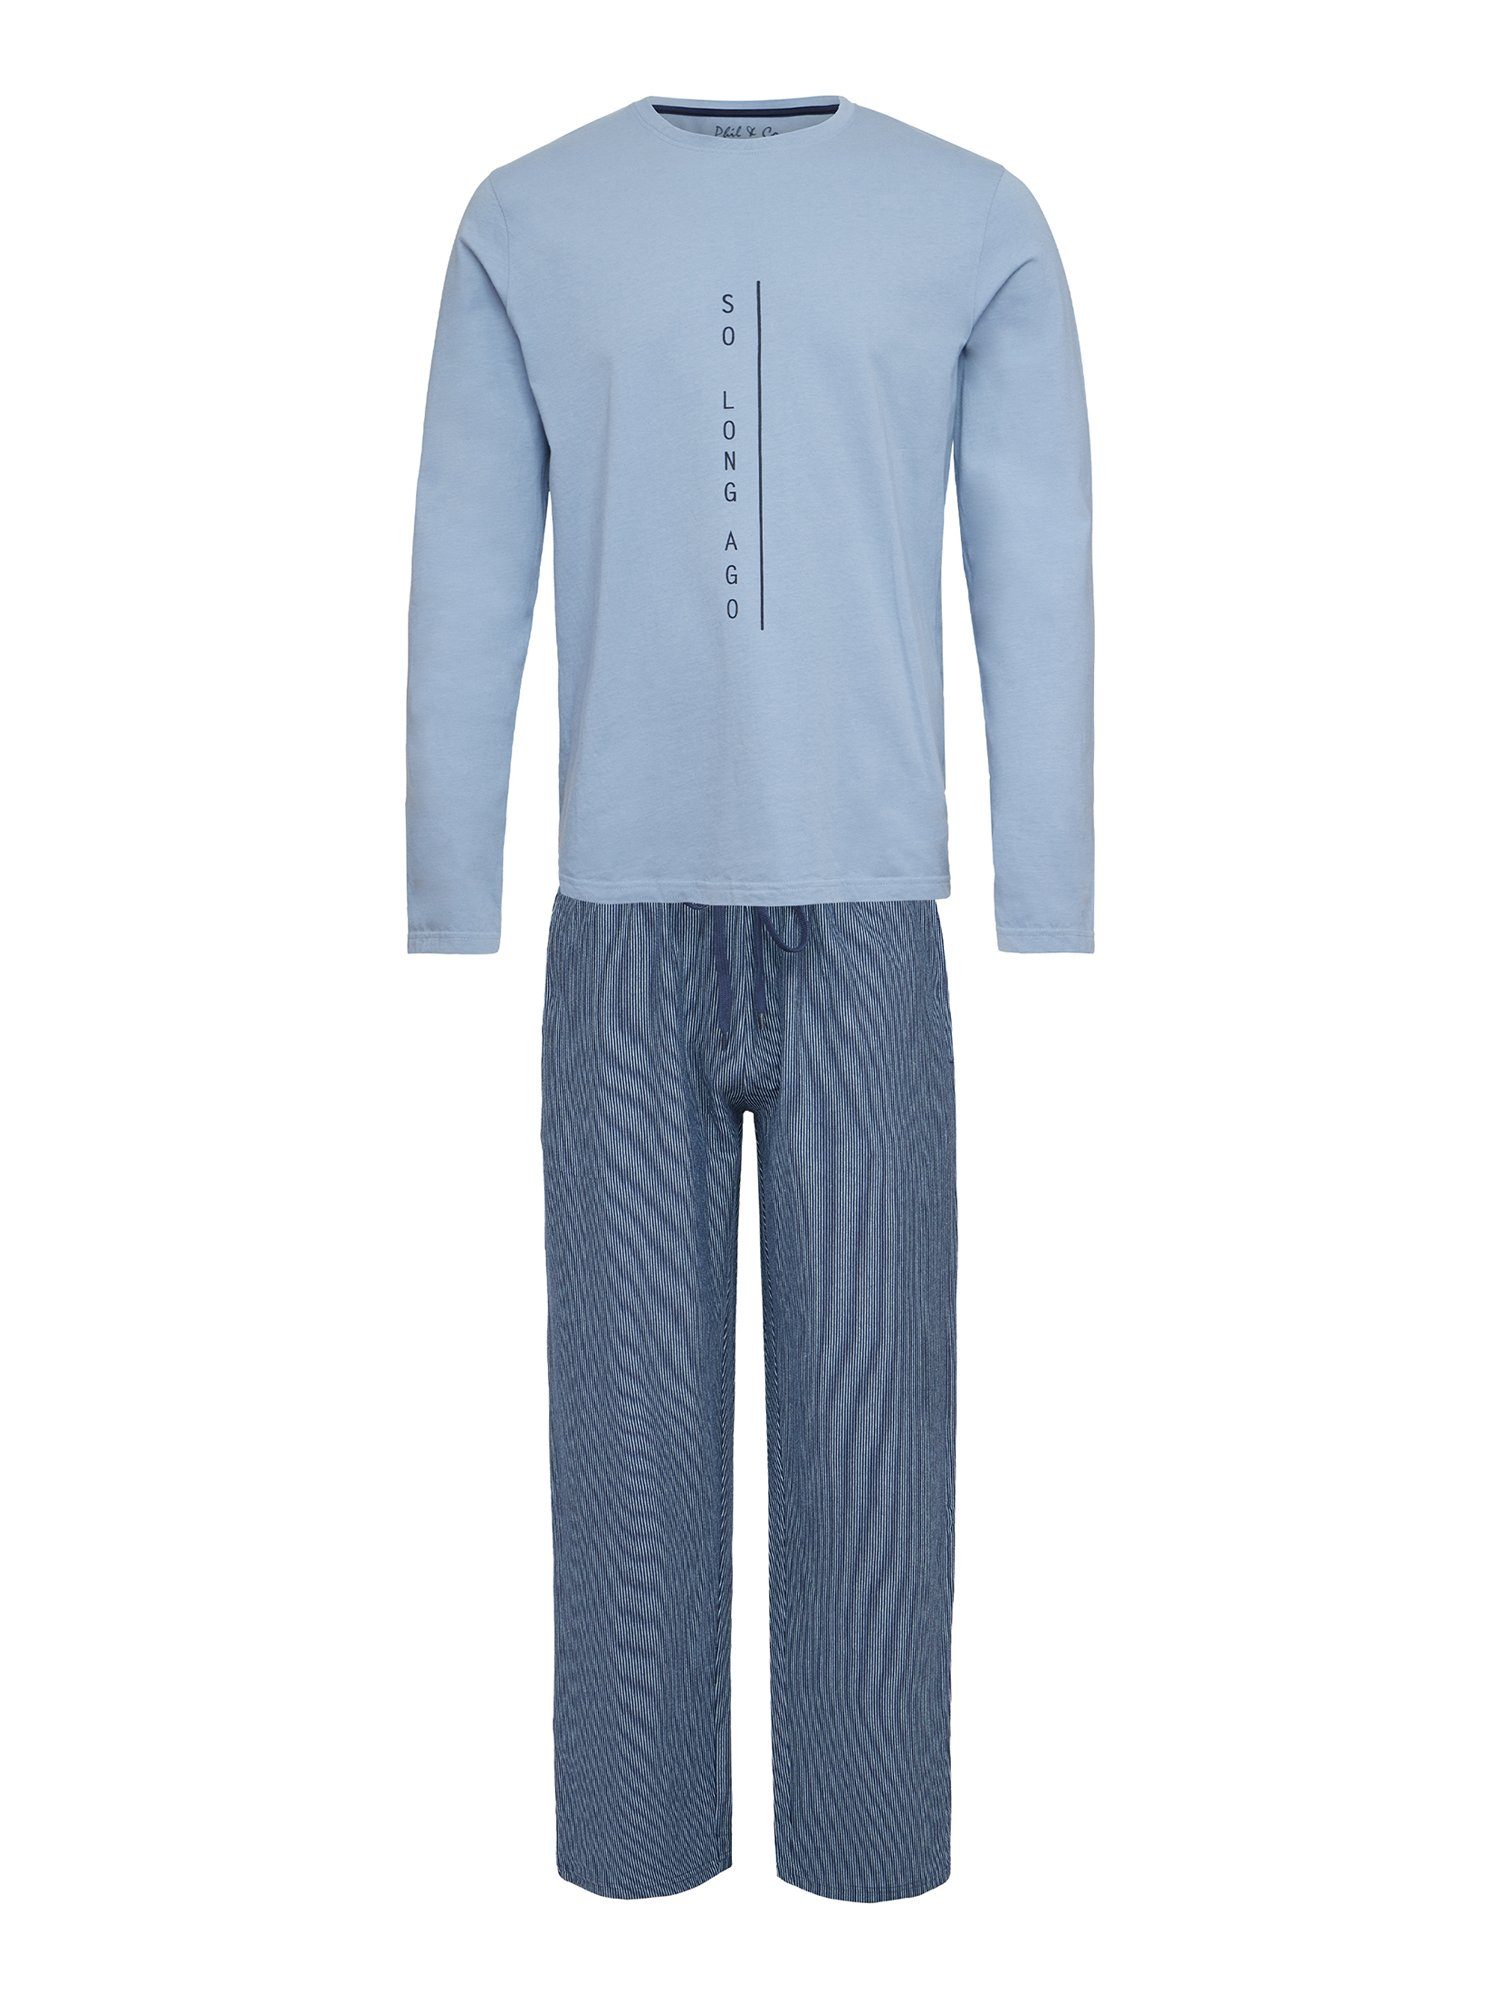 Phil & Co. Pyjama Special (2 tlg) schlafanzug schlafmode bequem hellblau-nadelstreifen | Pyjamas